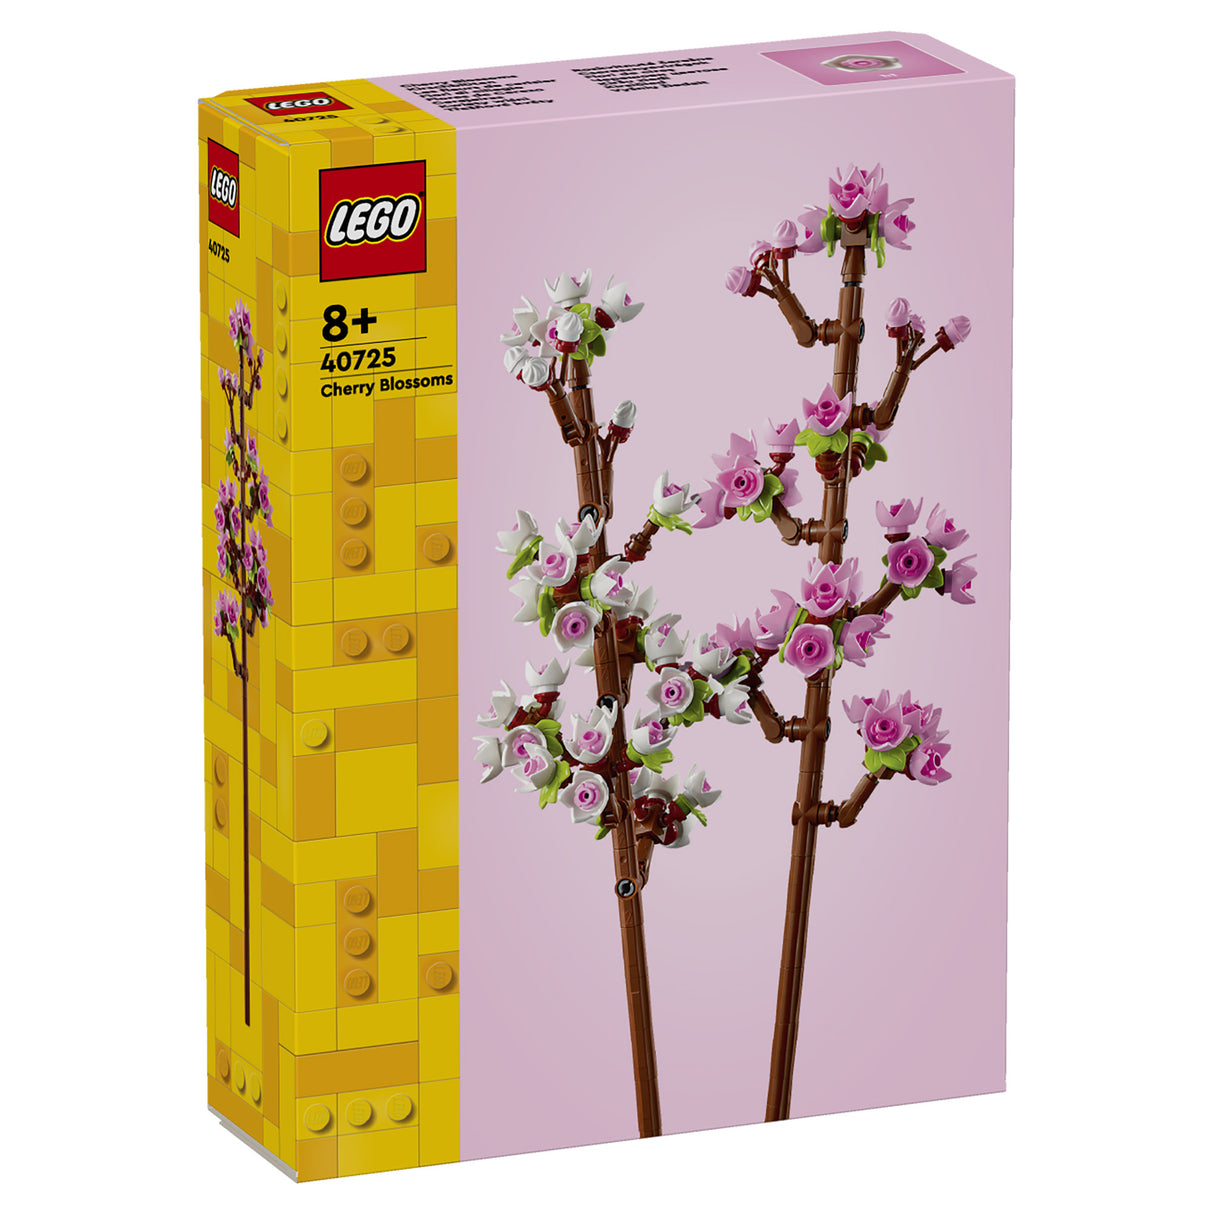 LEGO Flowers Cherry Blossoms 40725